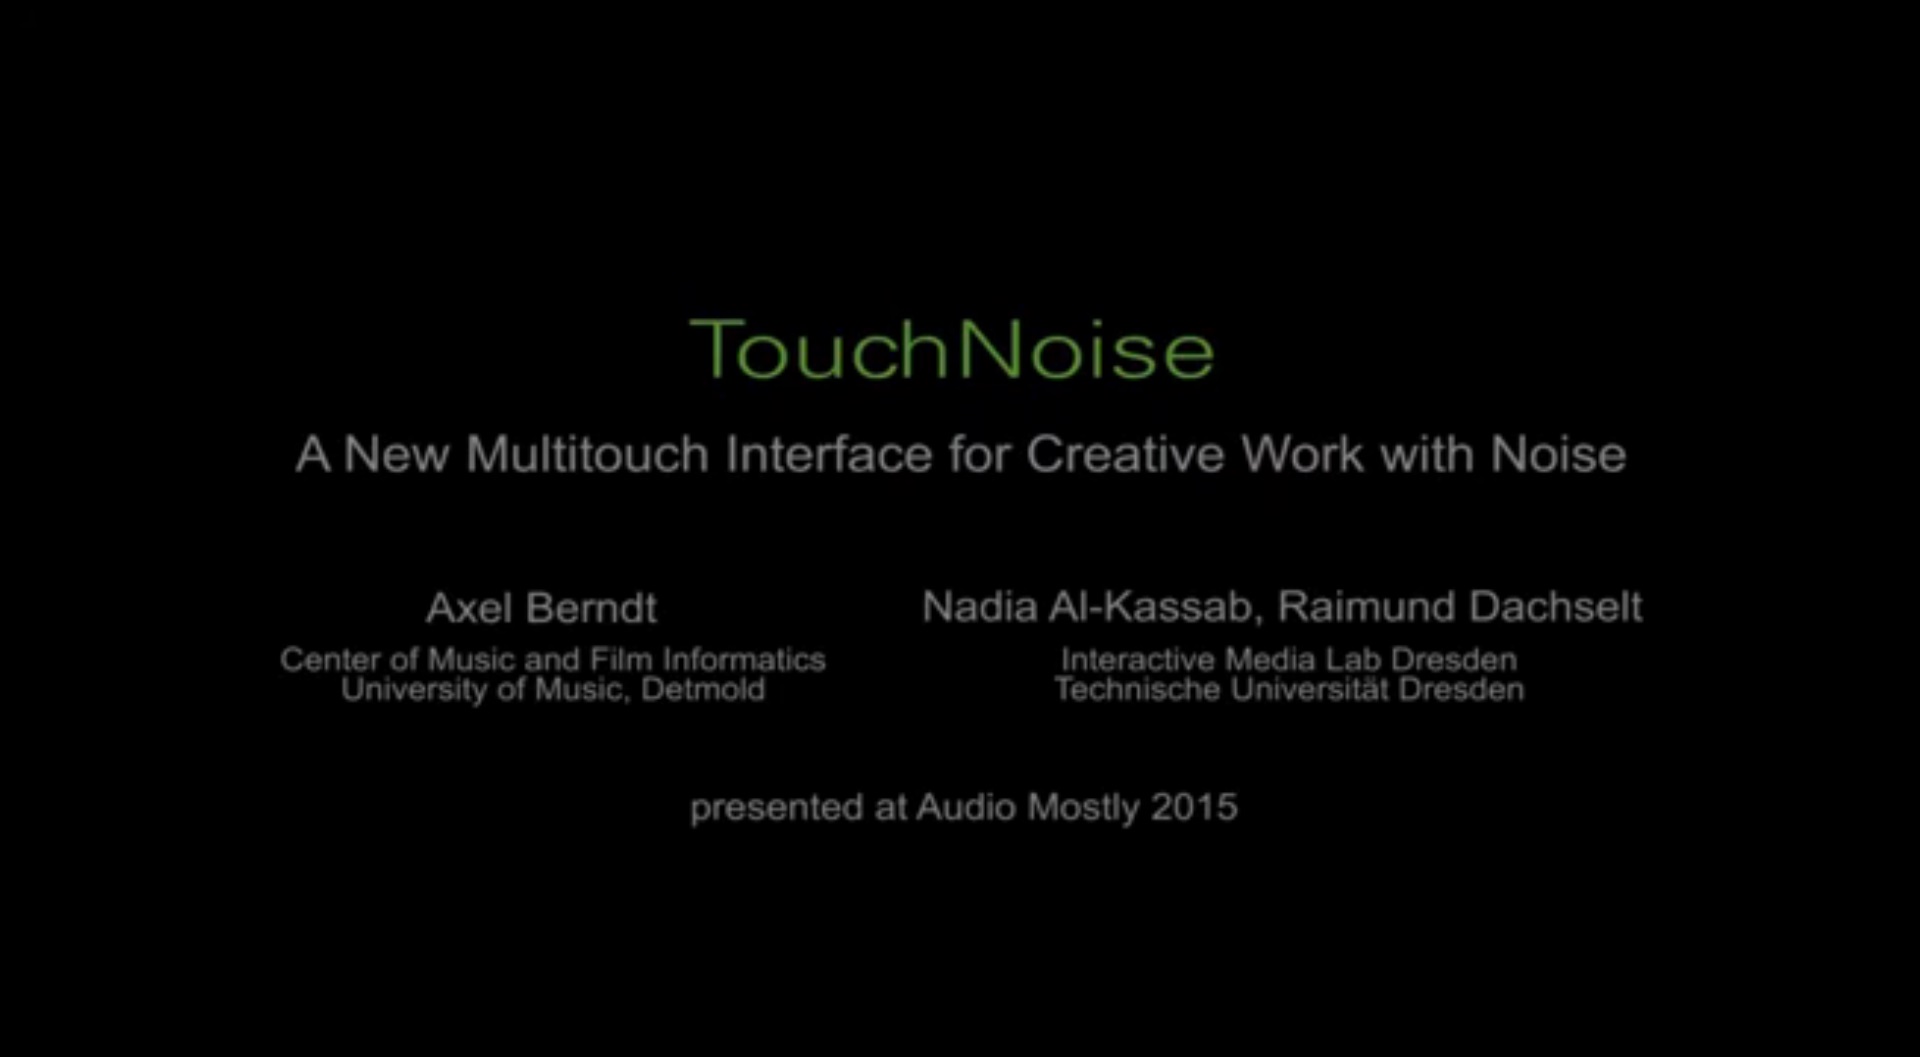 Full video of TouchNoise.